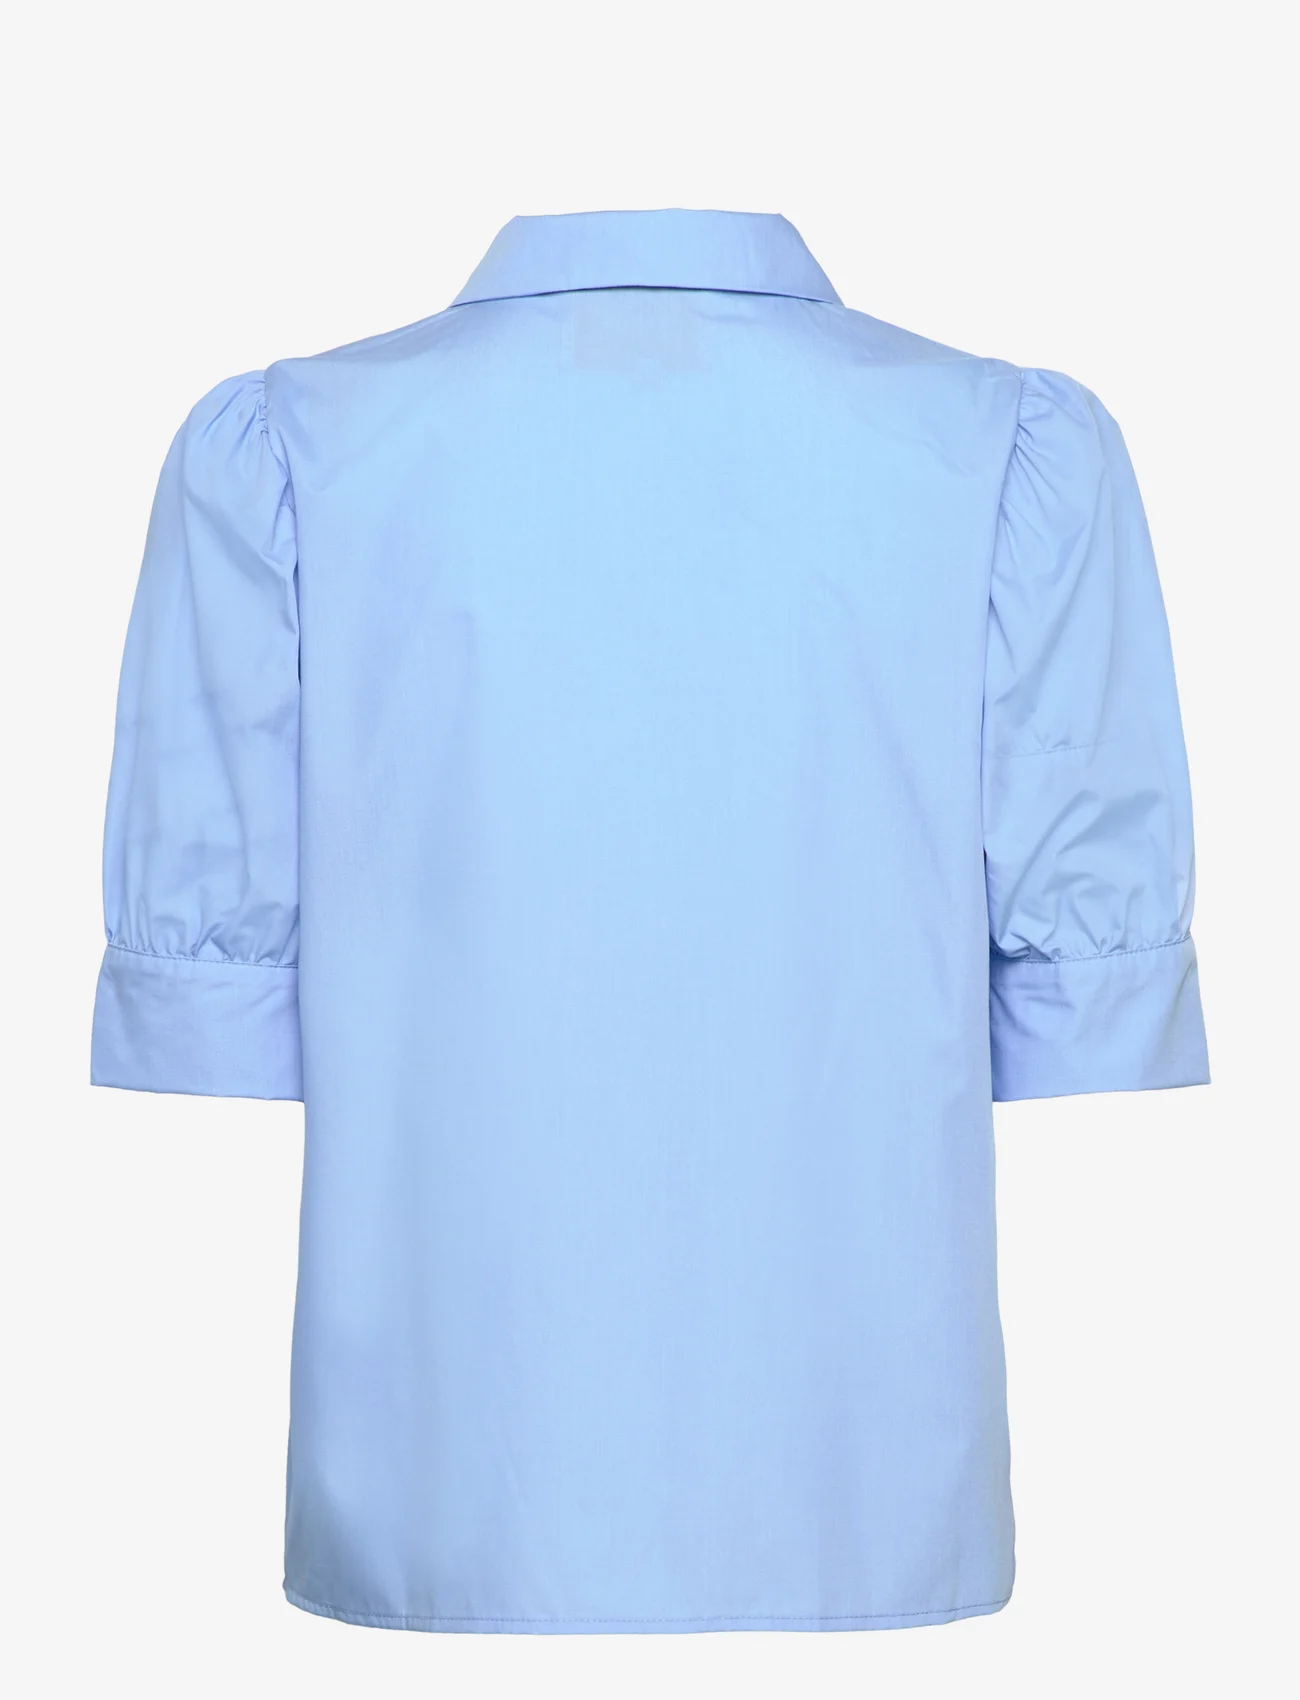 Minus - Molia Skjorte - overhemden met korte mouwen - blue bonnet - 1